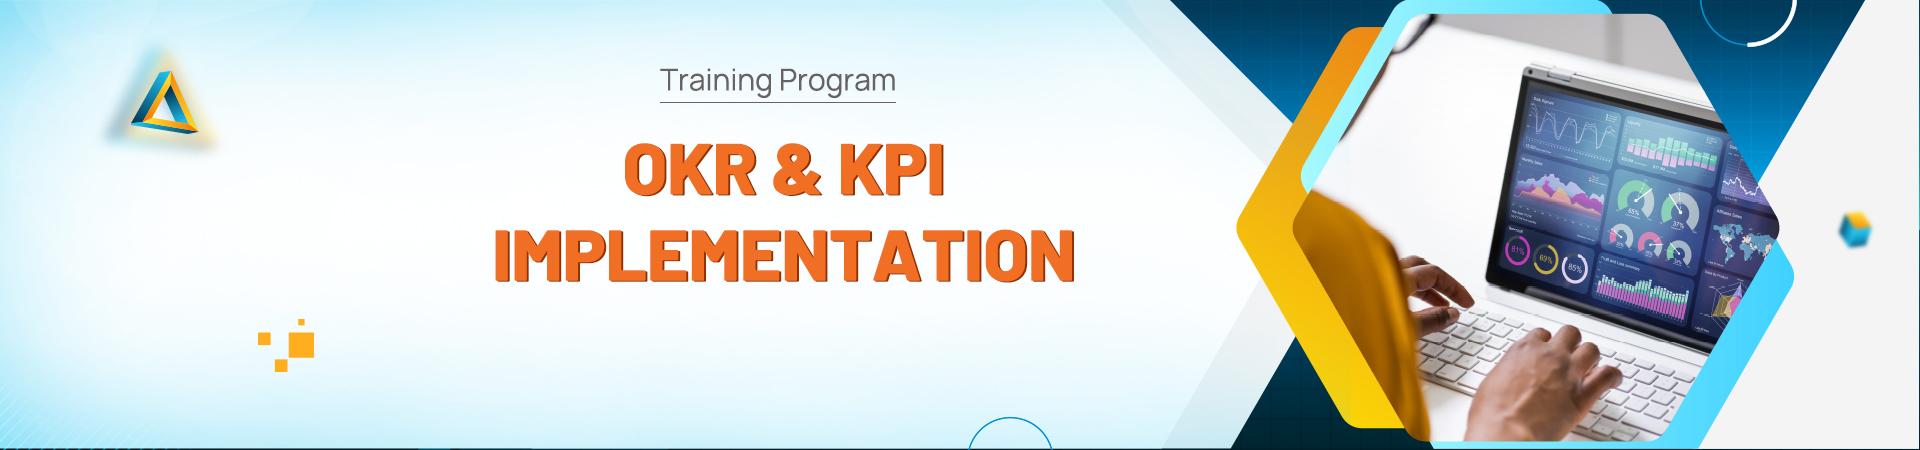 OKR & KPI Implementation